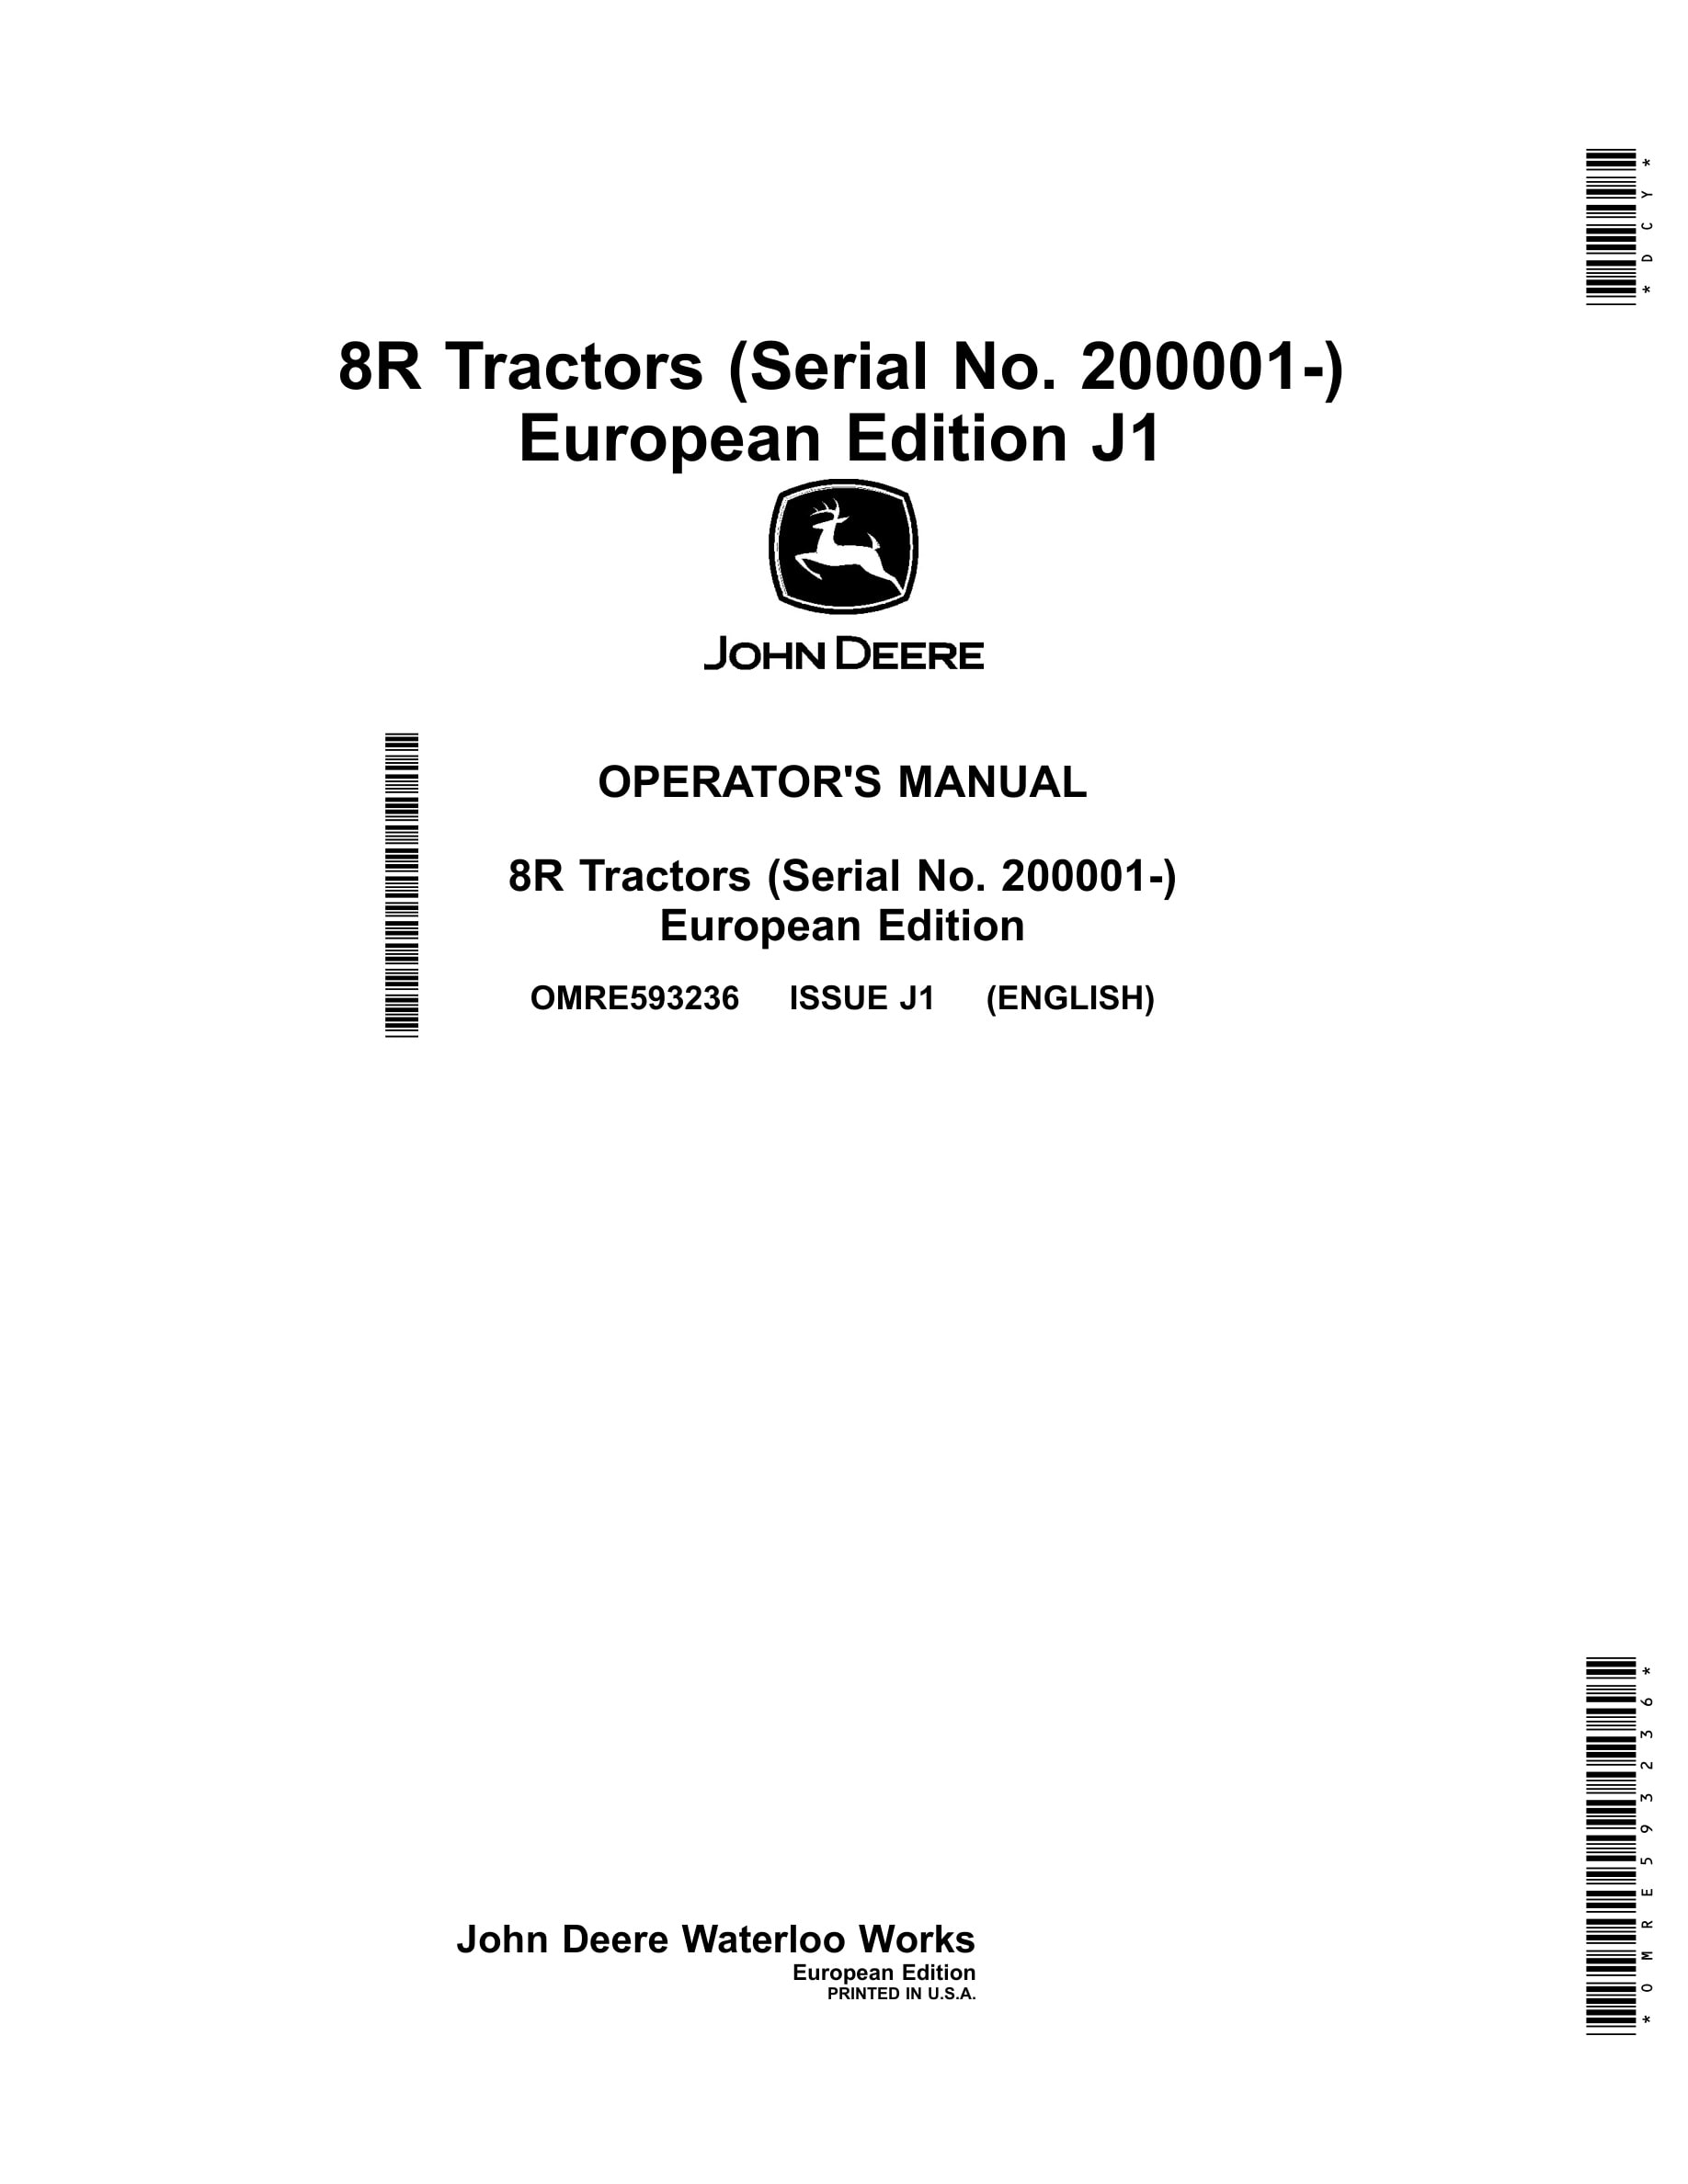 John Deere 8r Tractors Operator Manuals OMRE593236-1